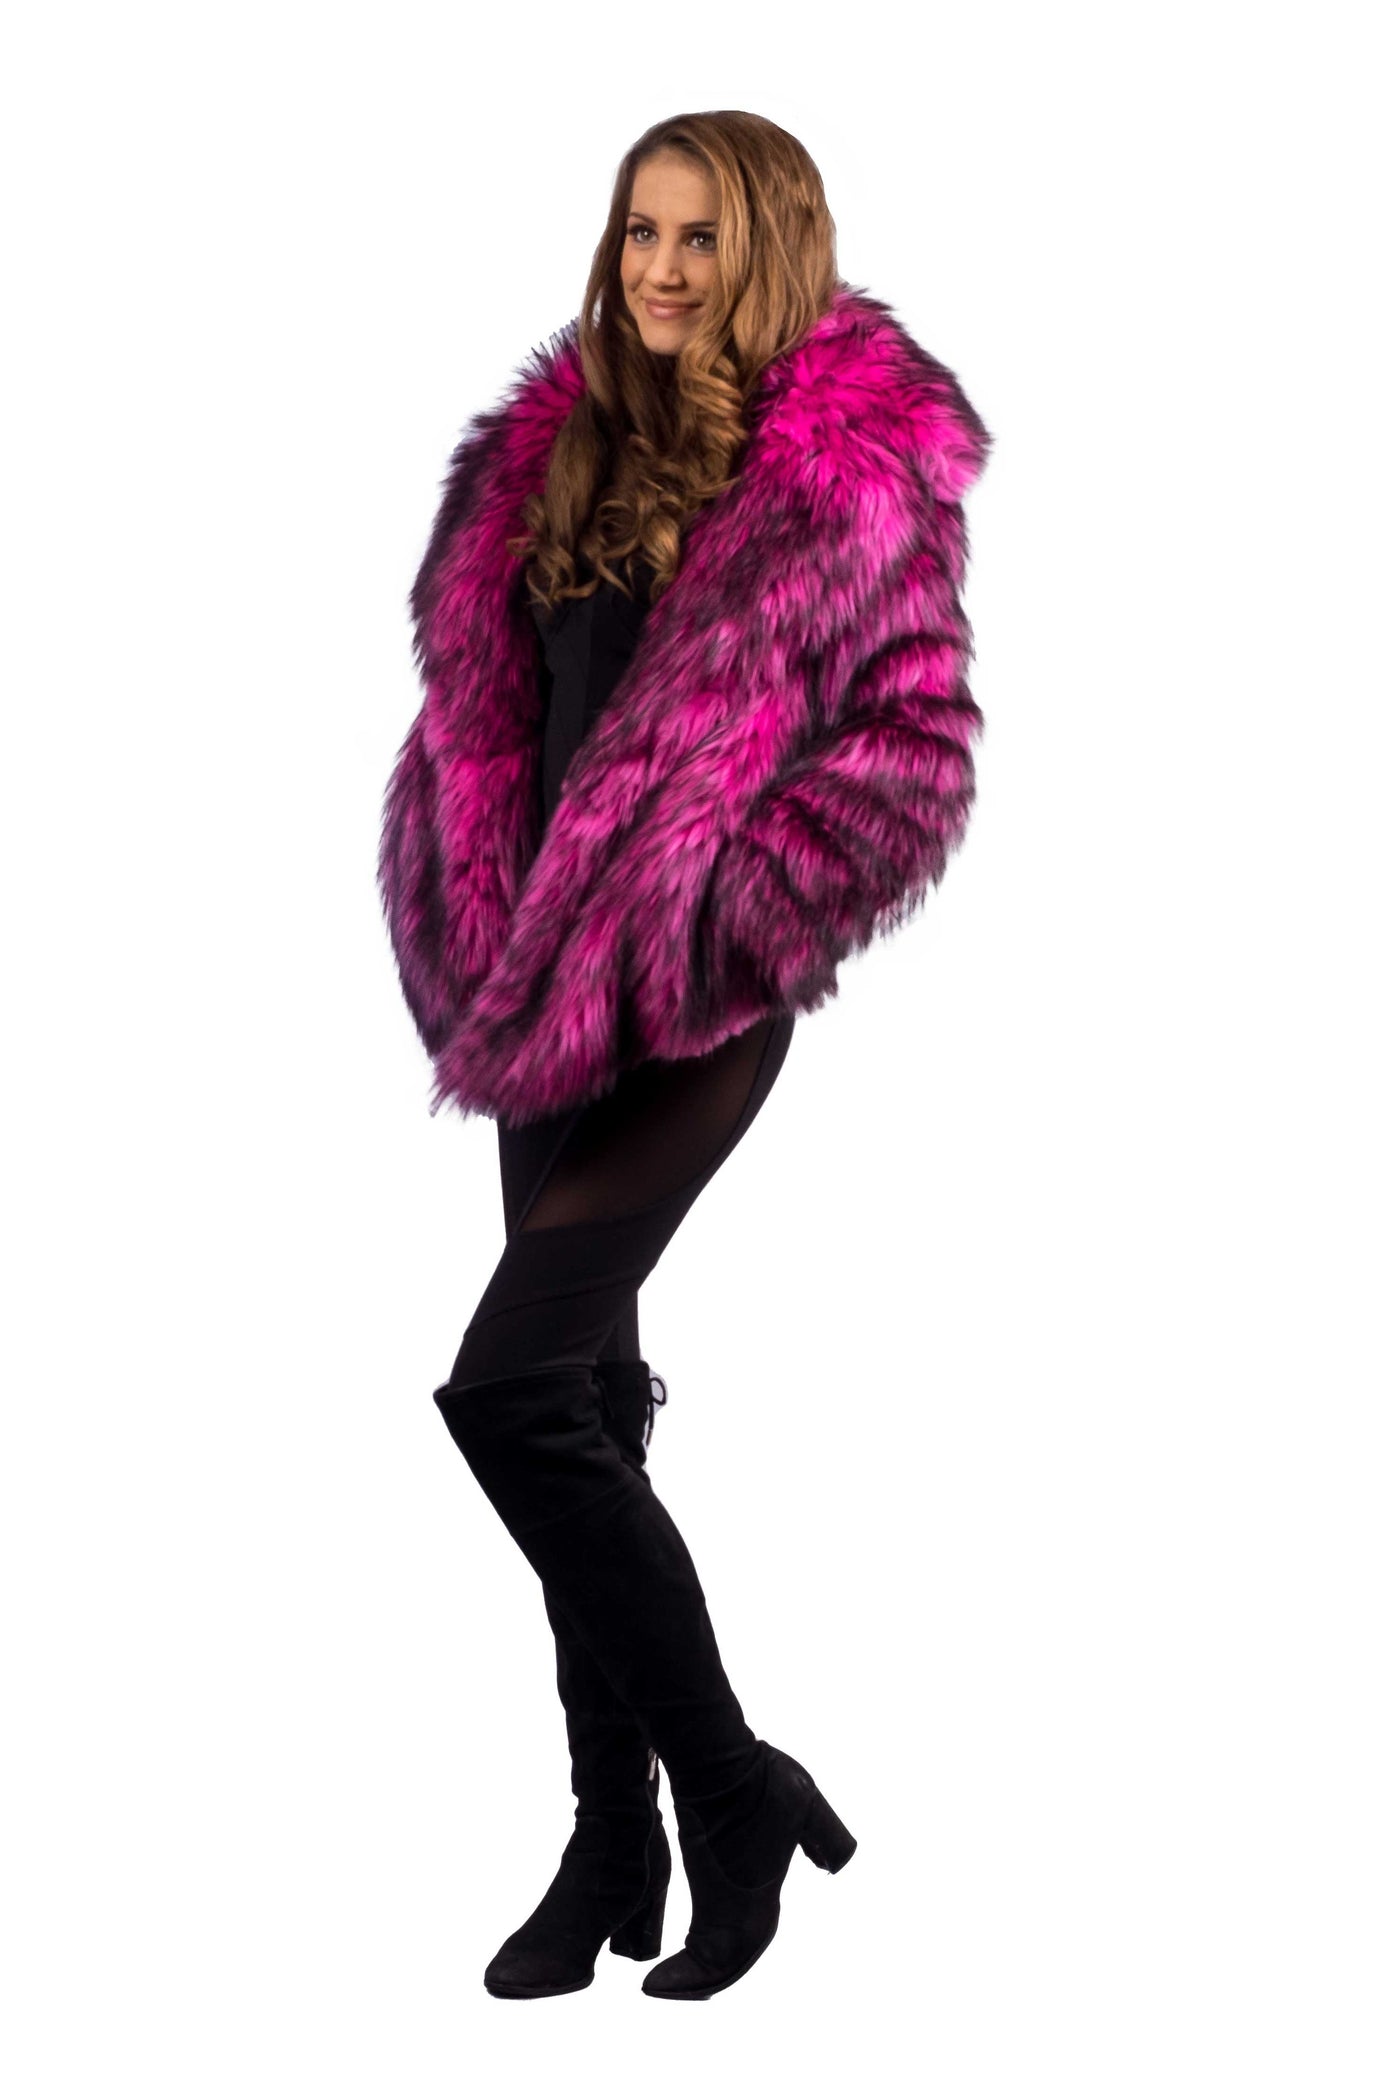 Women's Shorty Duke Coat in "Hot Pink Wolf" STOCK